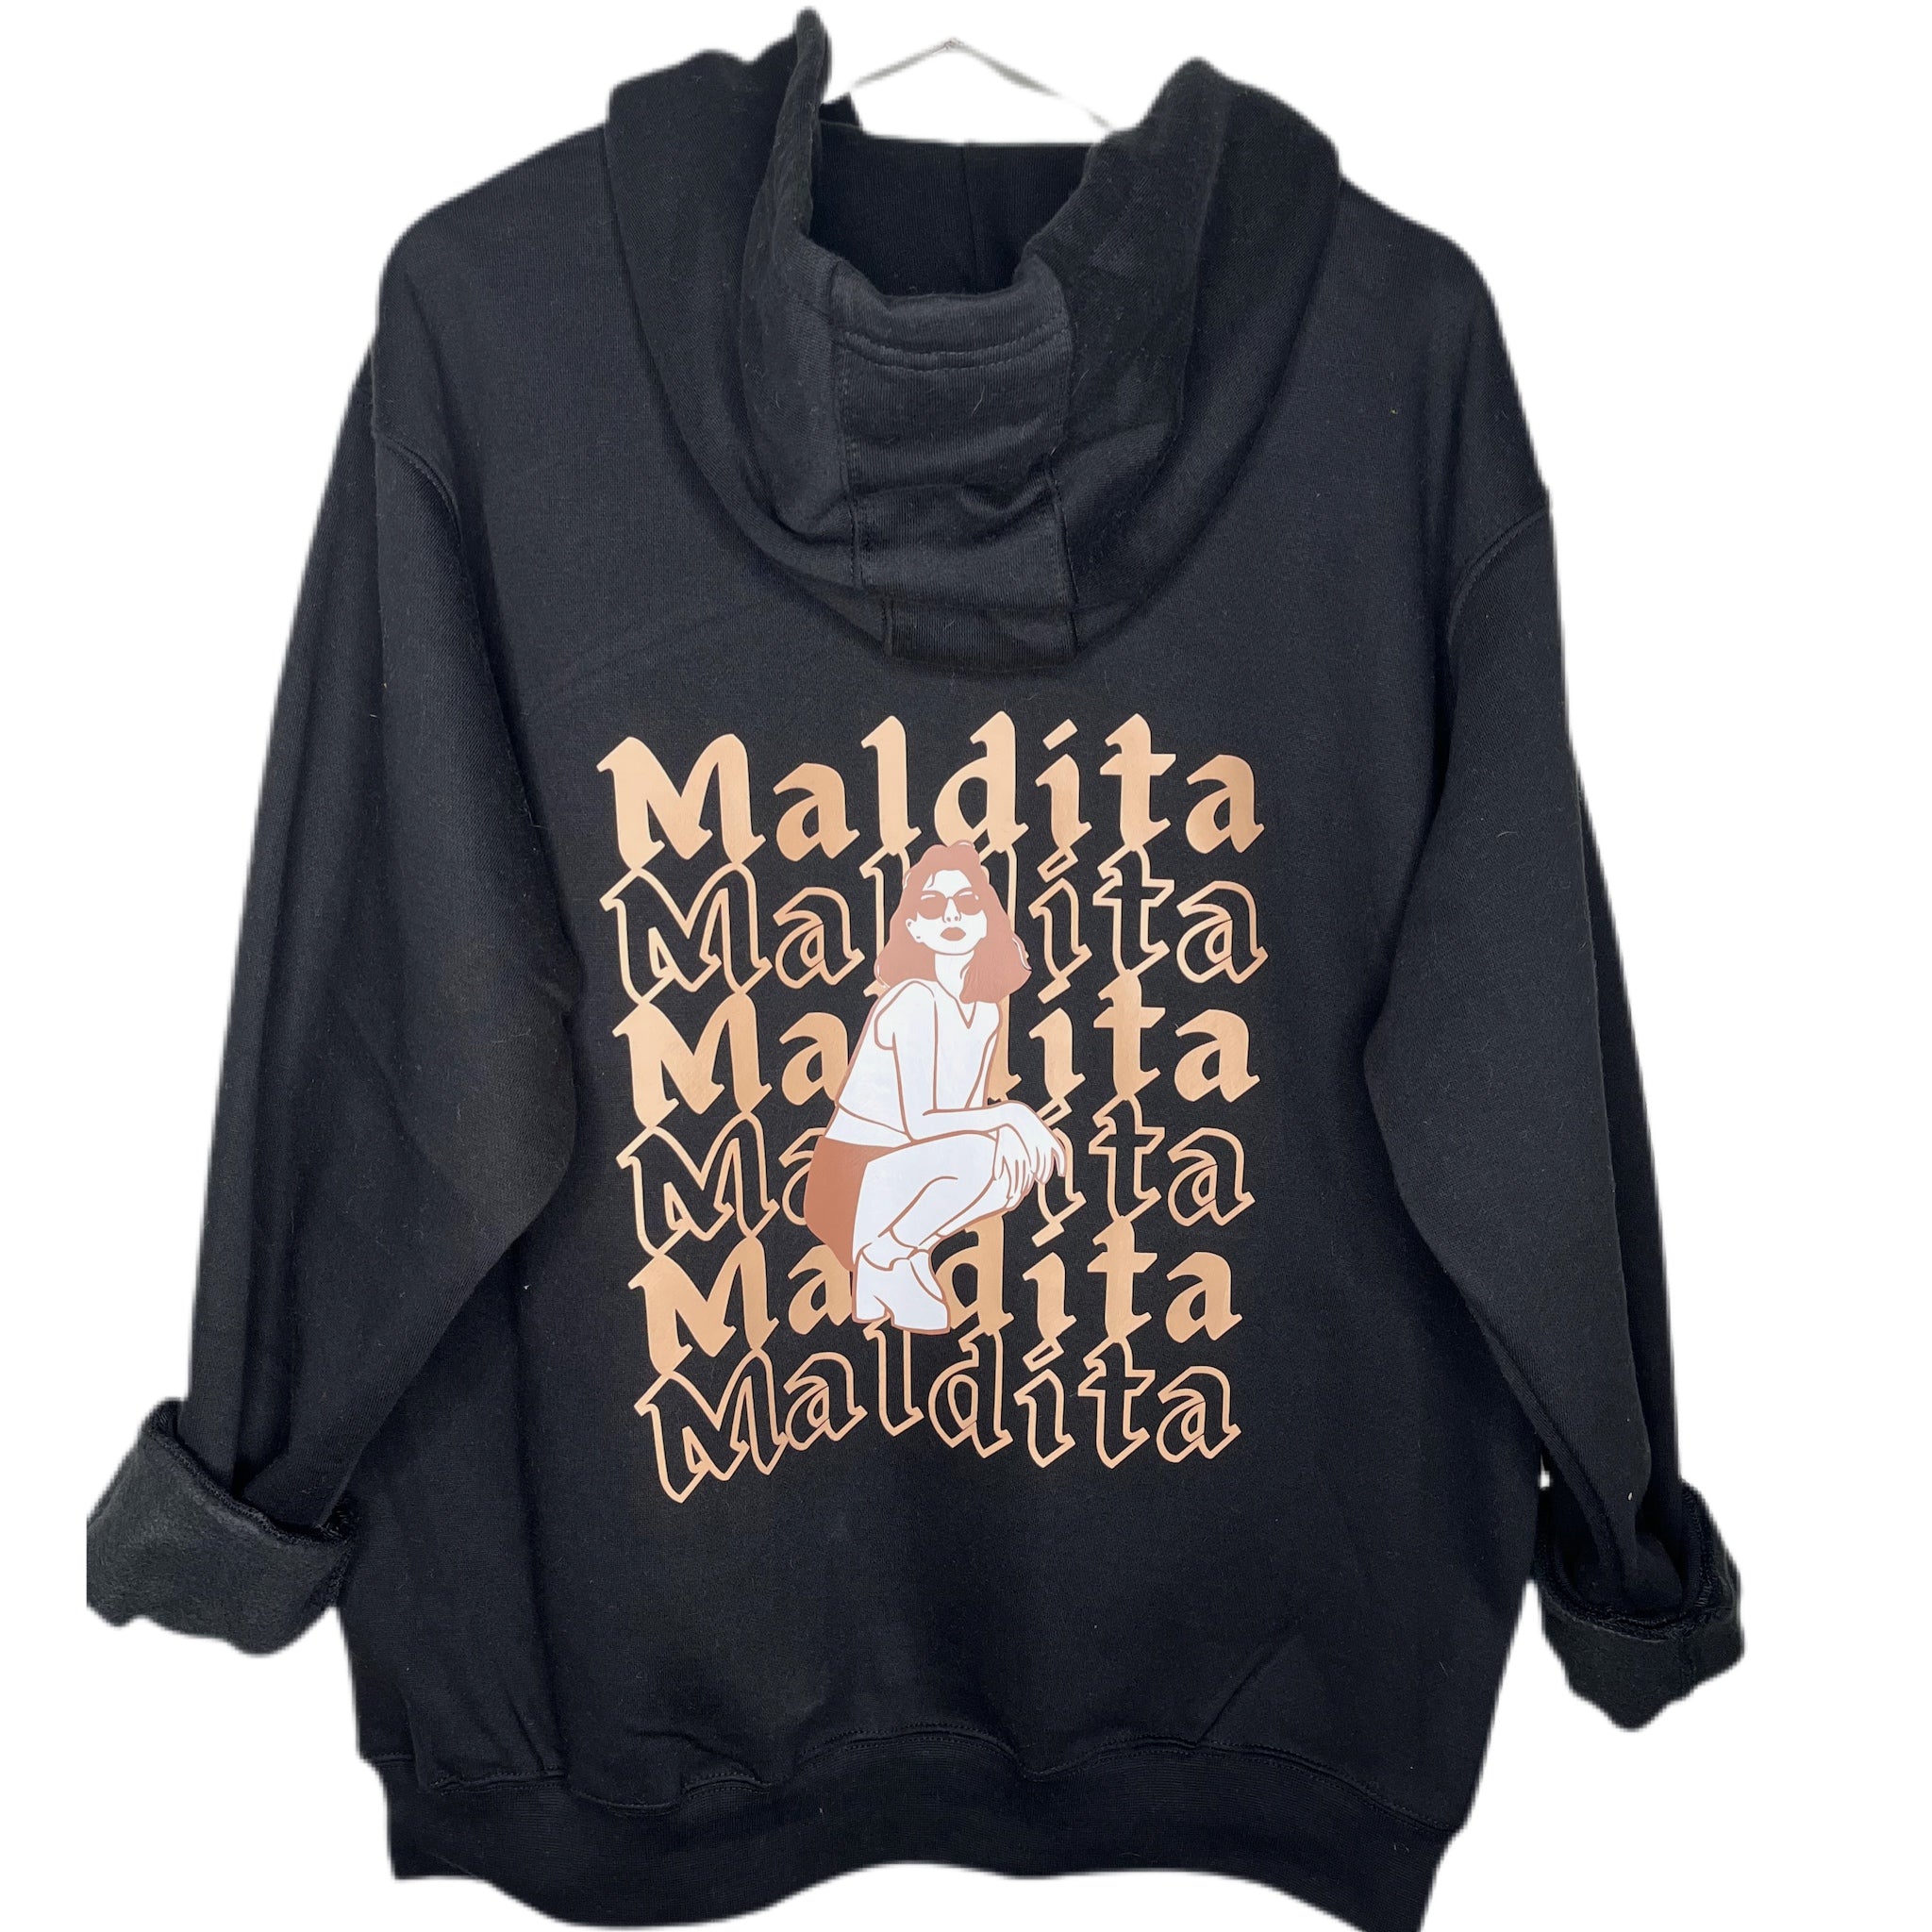 Black “MALDITA” Hoodie Sweater